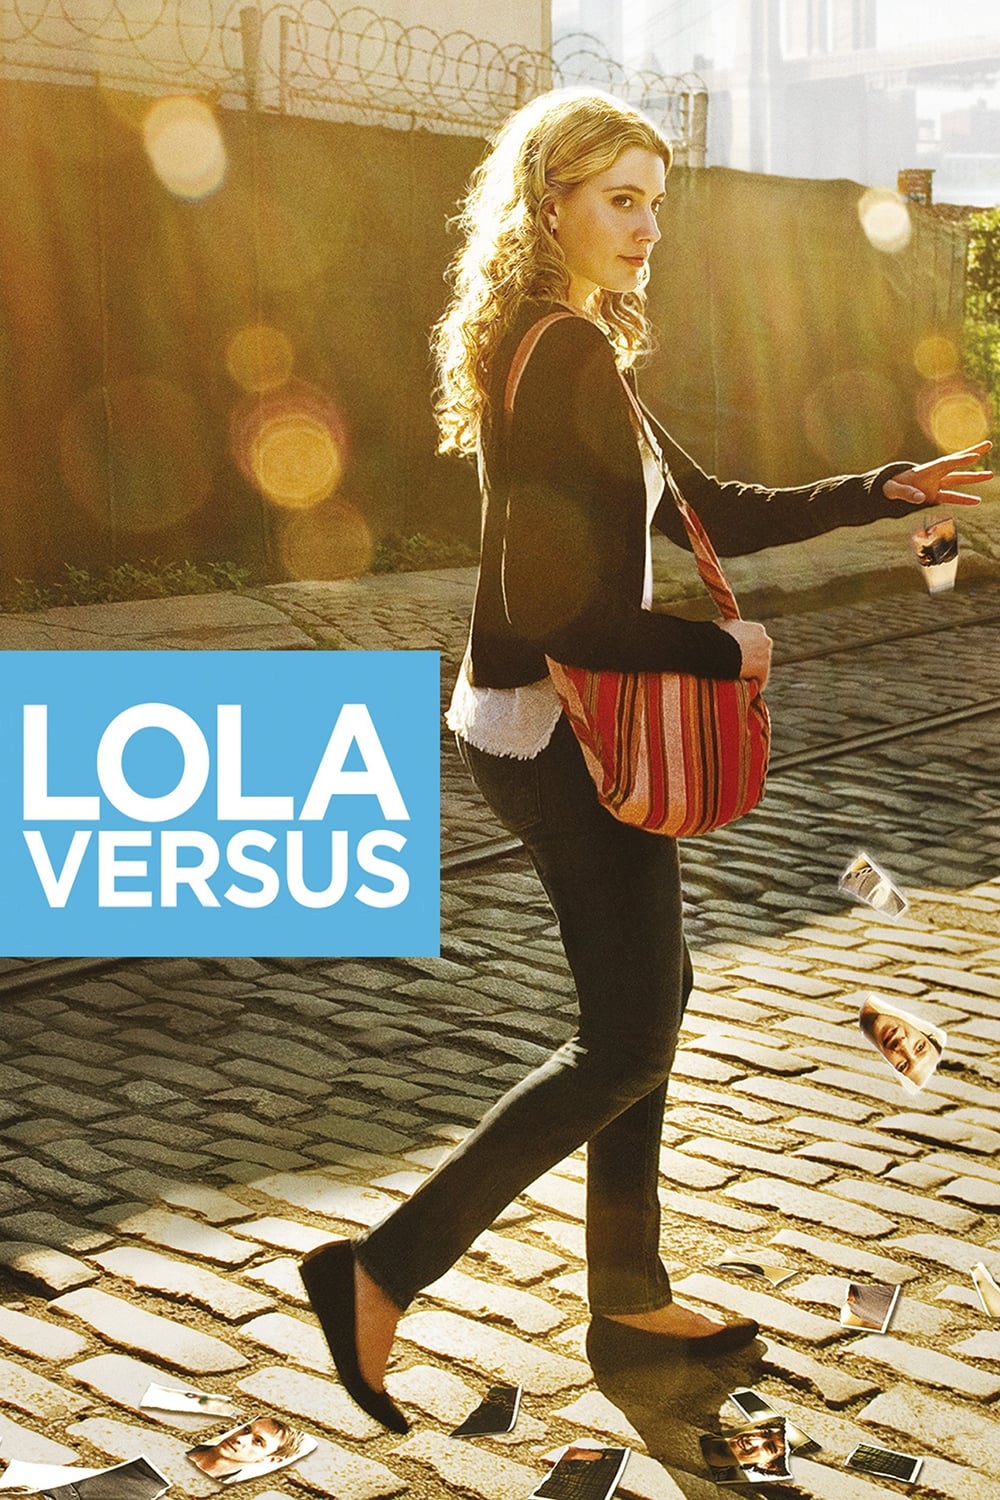 Lola Versus [HD] (2012)